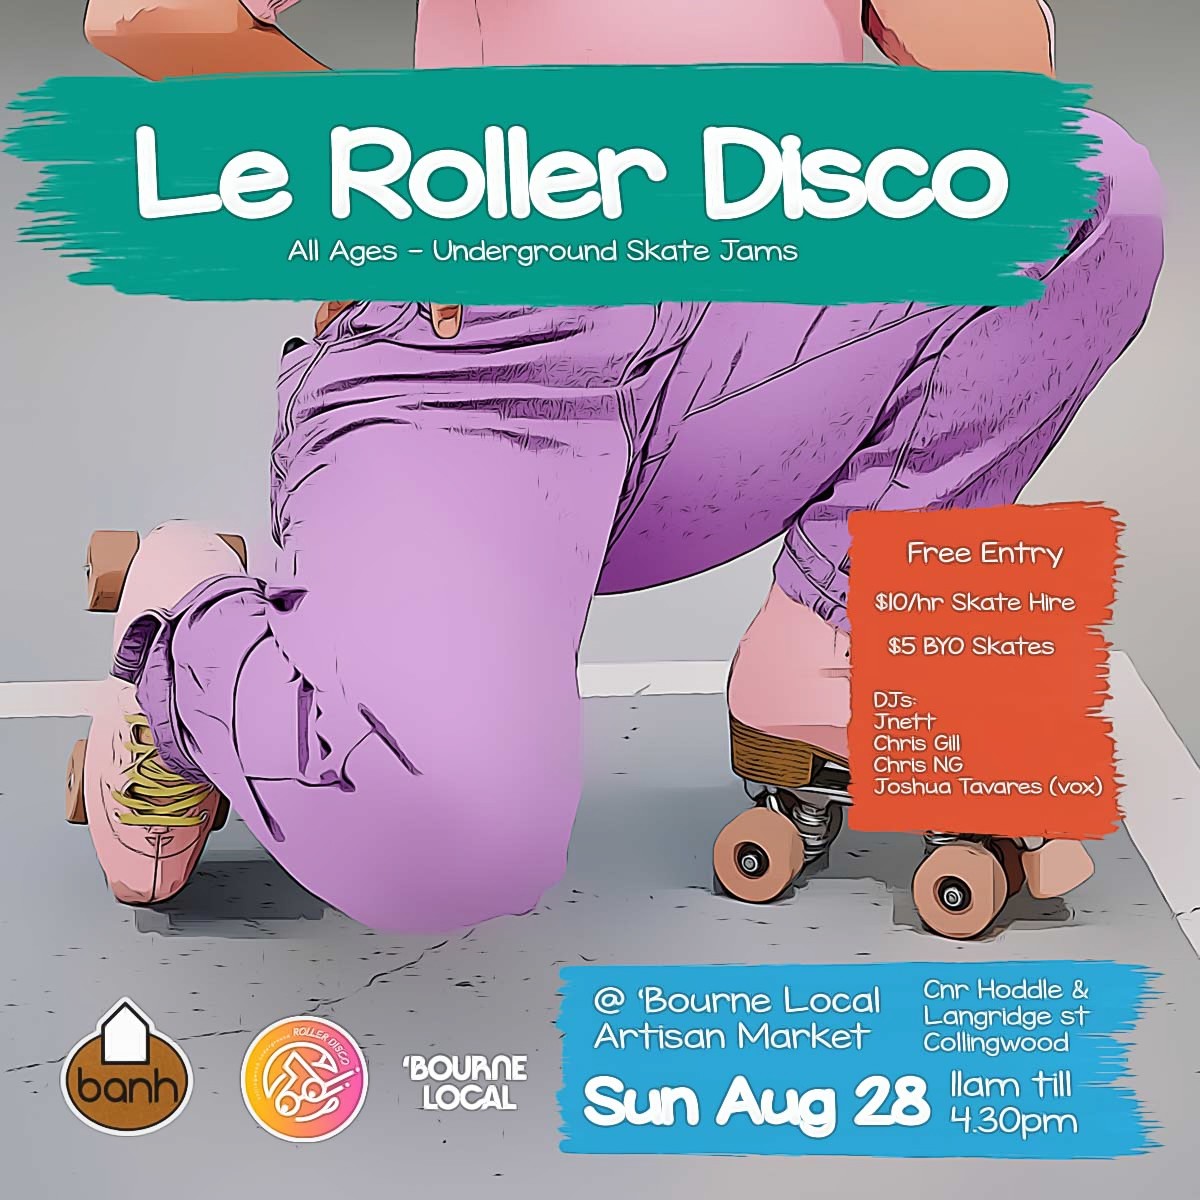 Le Roller Disco @ Bourne Local Artisan Market Sun Aug 28